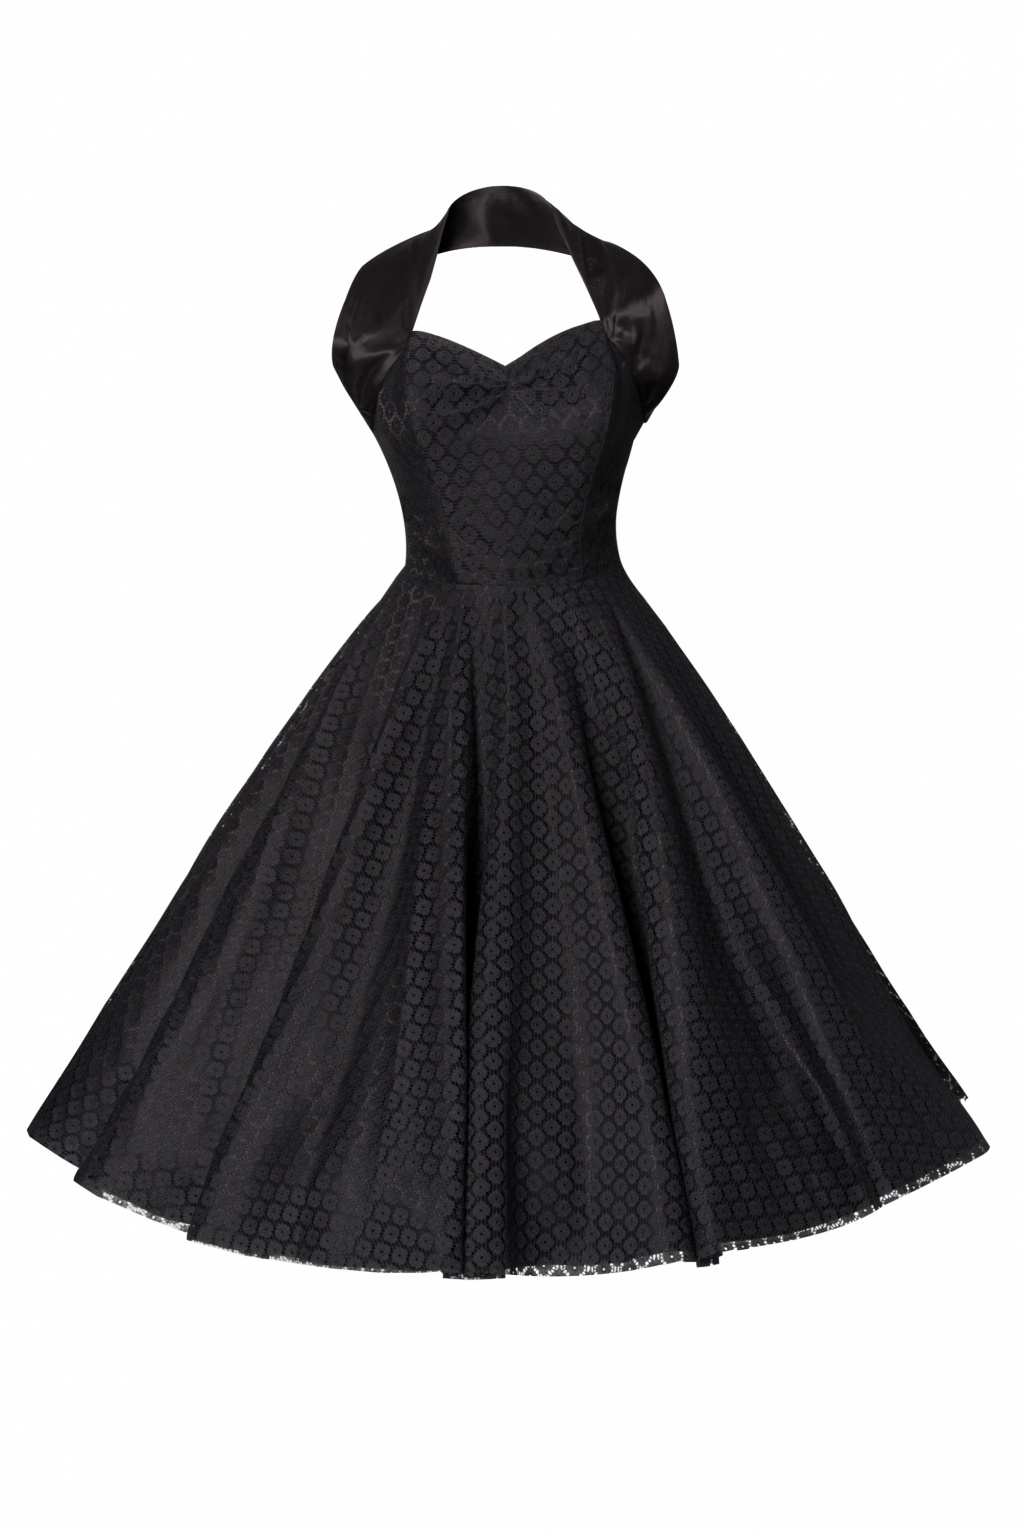 1950s Retro halter luxury Black Satin Lace swing dress